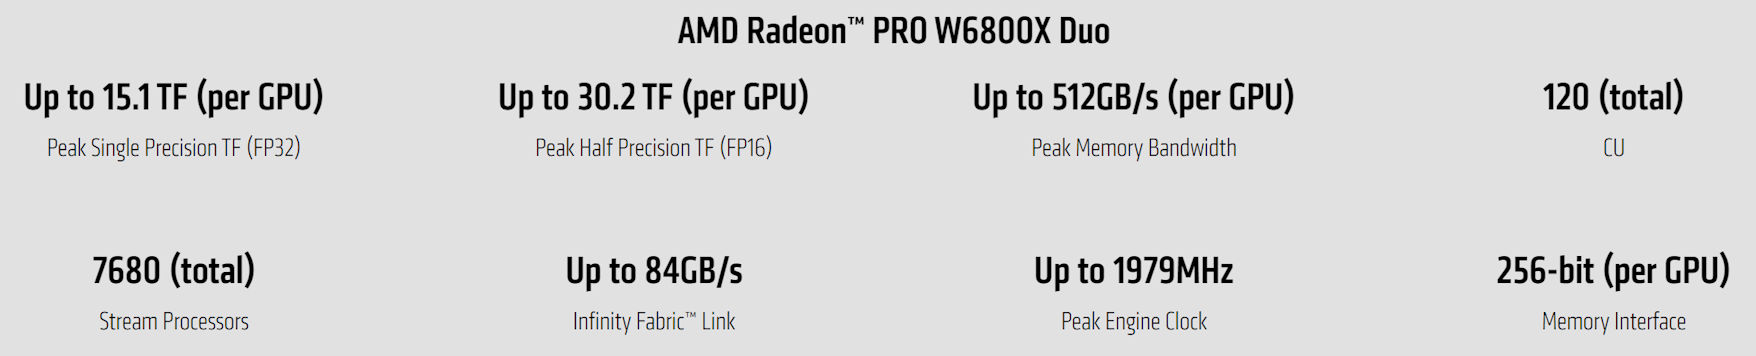 Radeon Pro W6000X